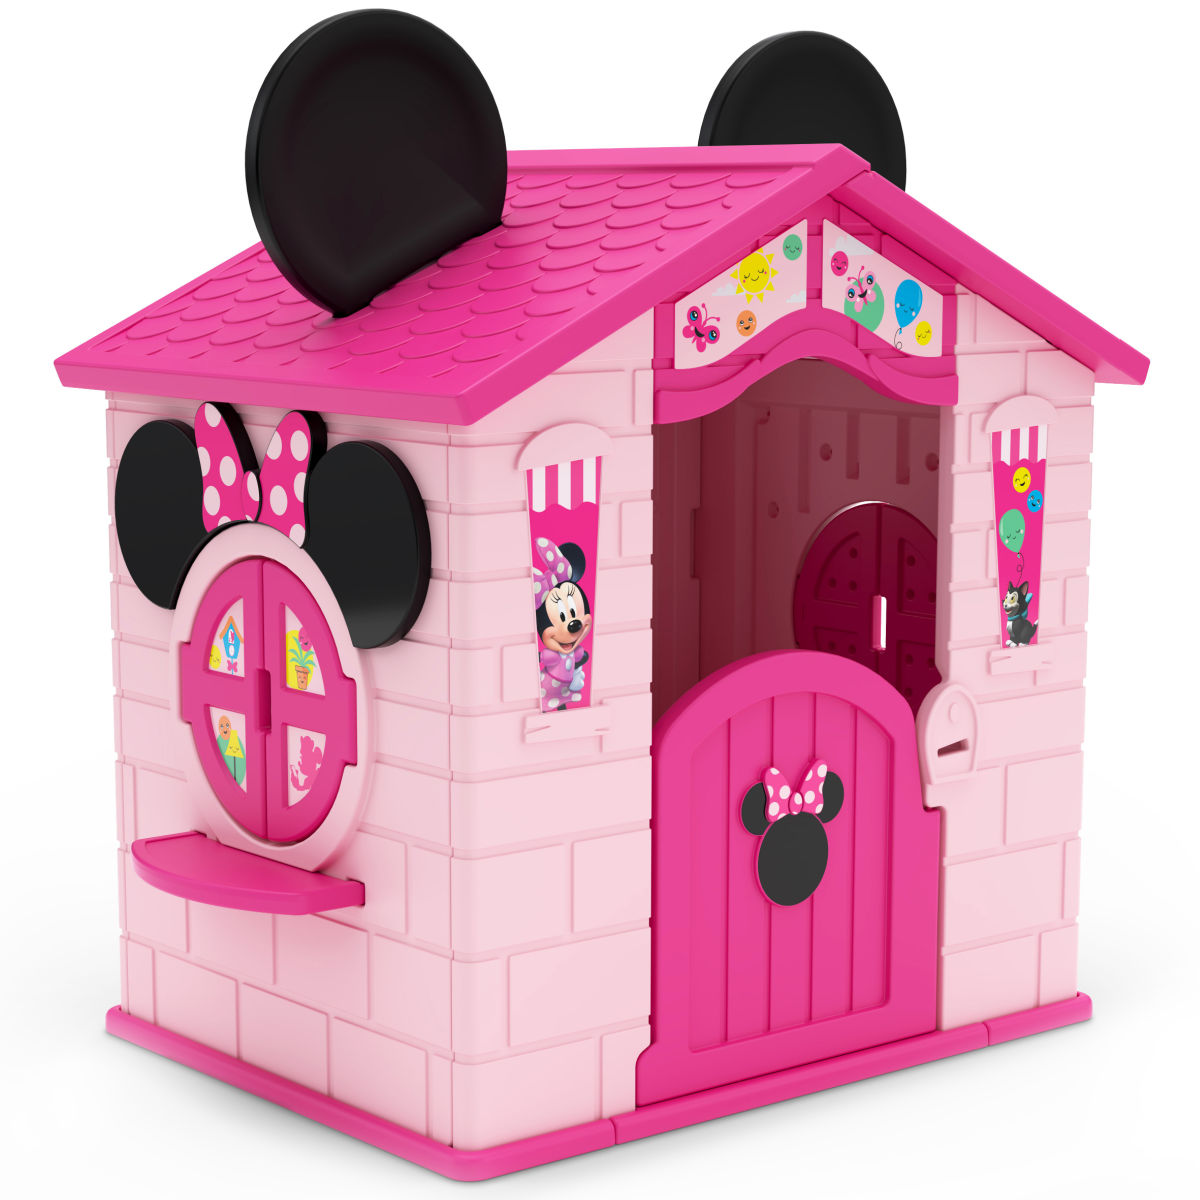 Delta Children Disney Minnie Mouse Plastic Indoor Outdoor Playhouse